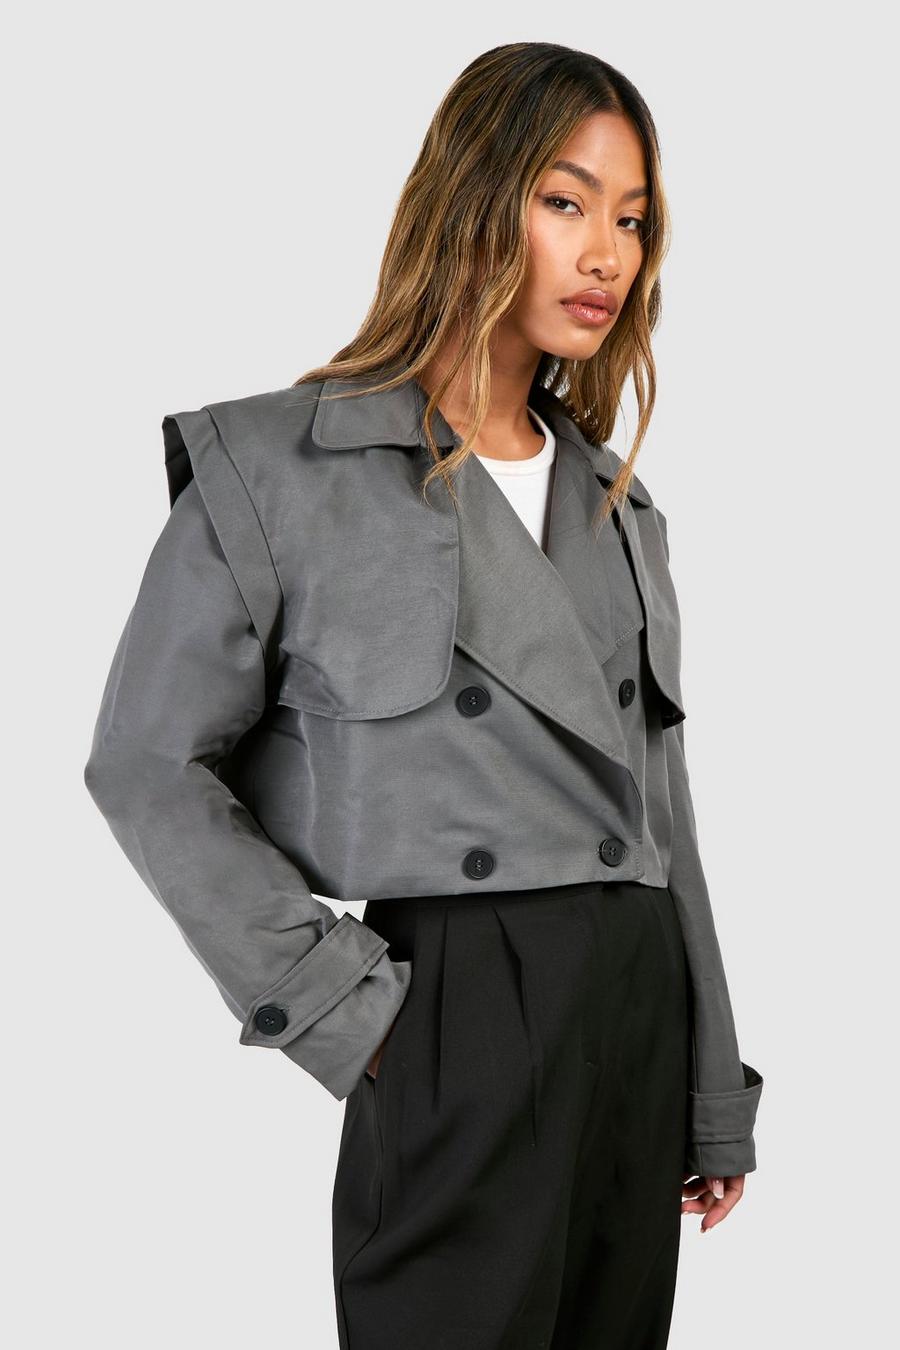 Charcoal grey Short Trench Coat